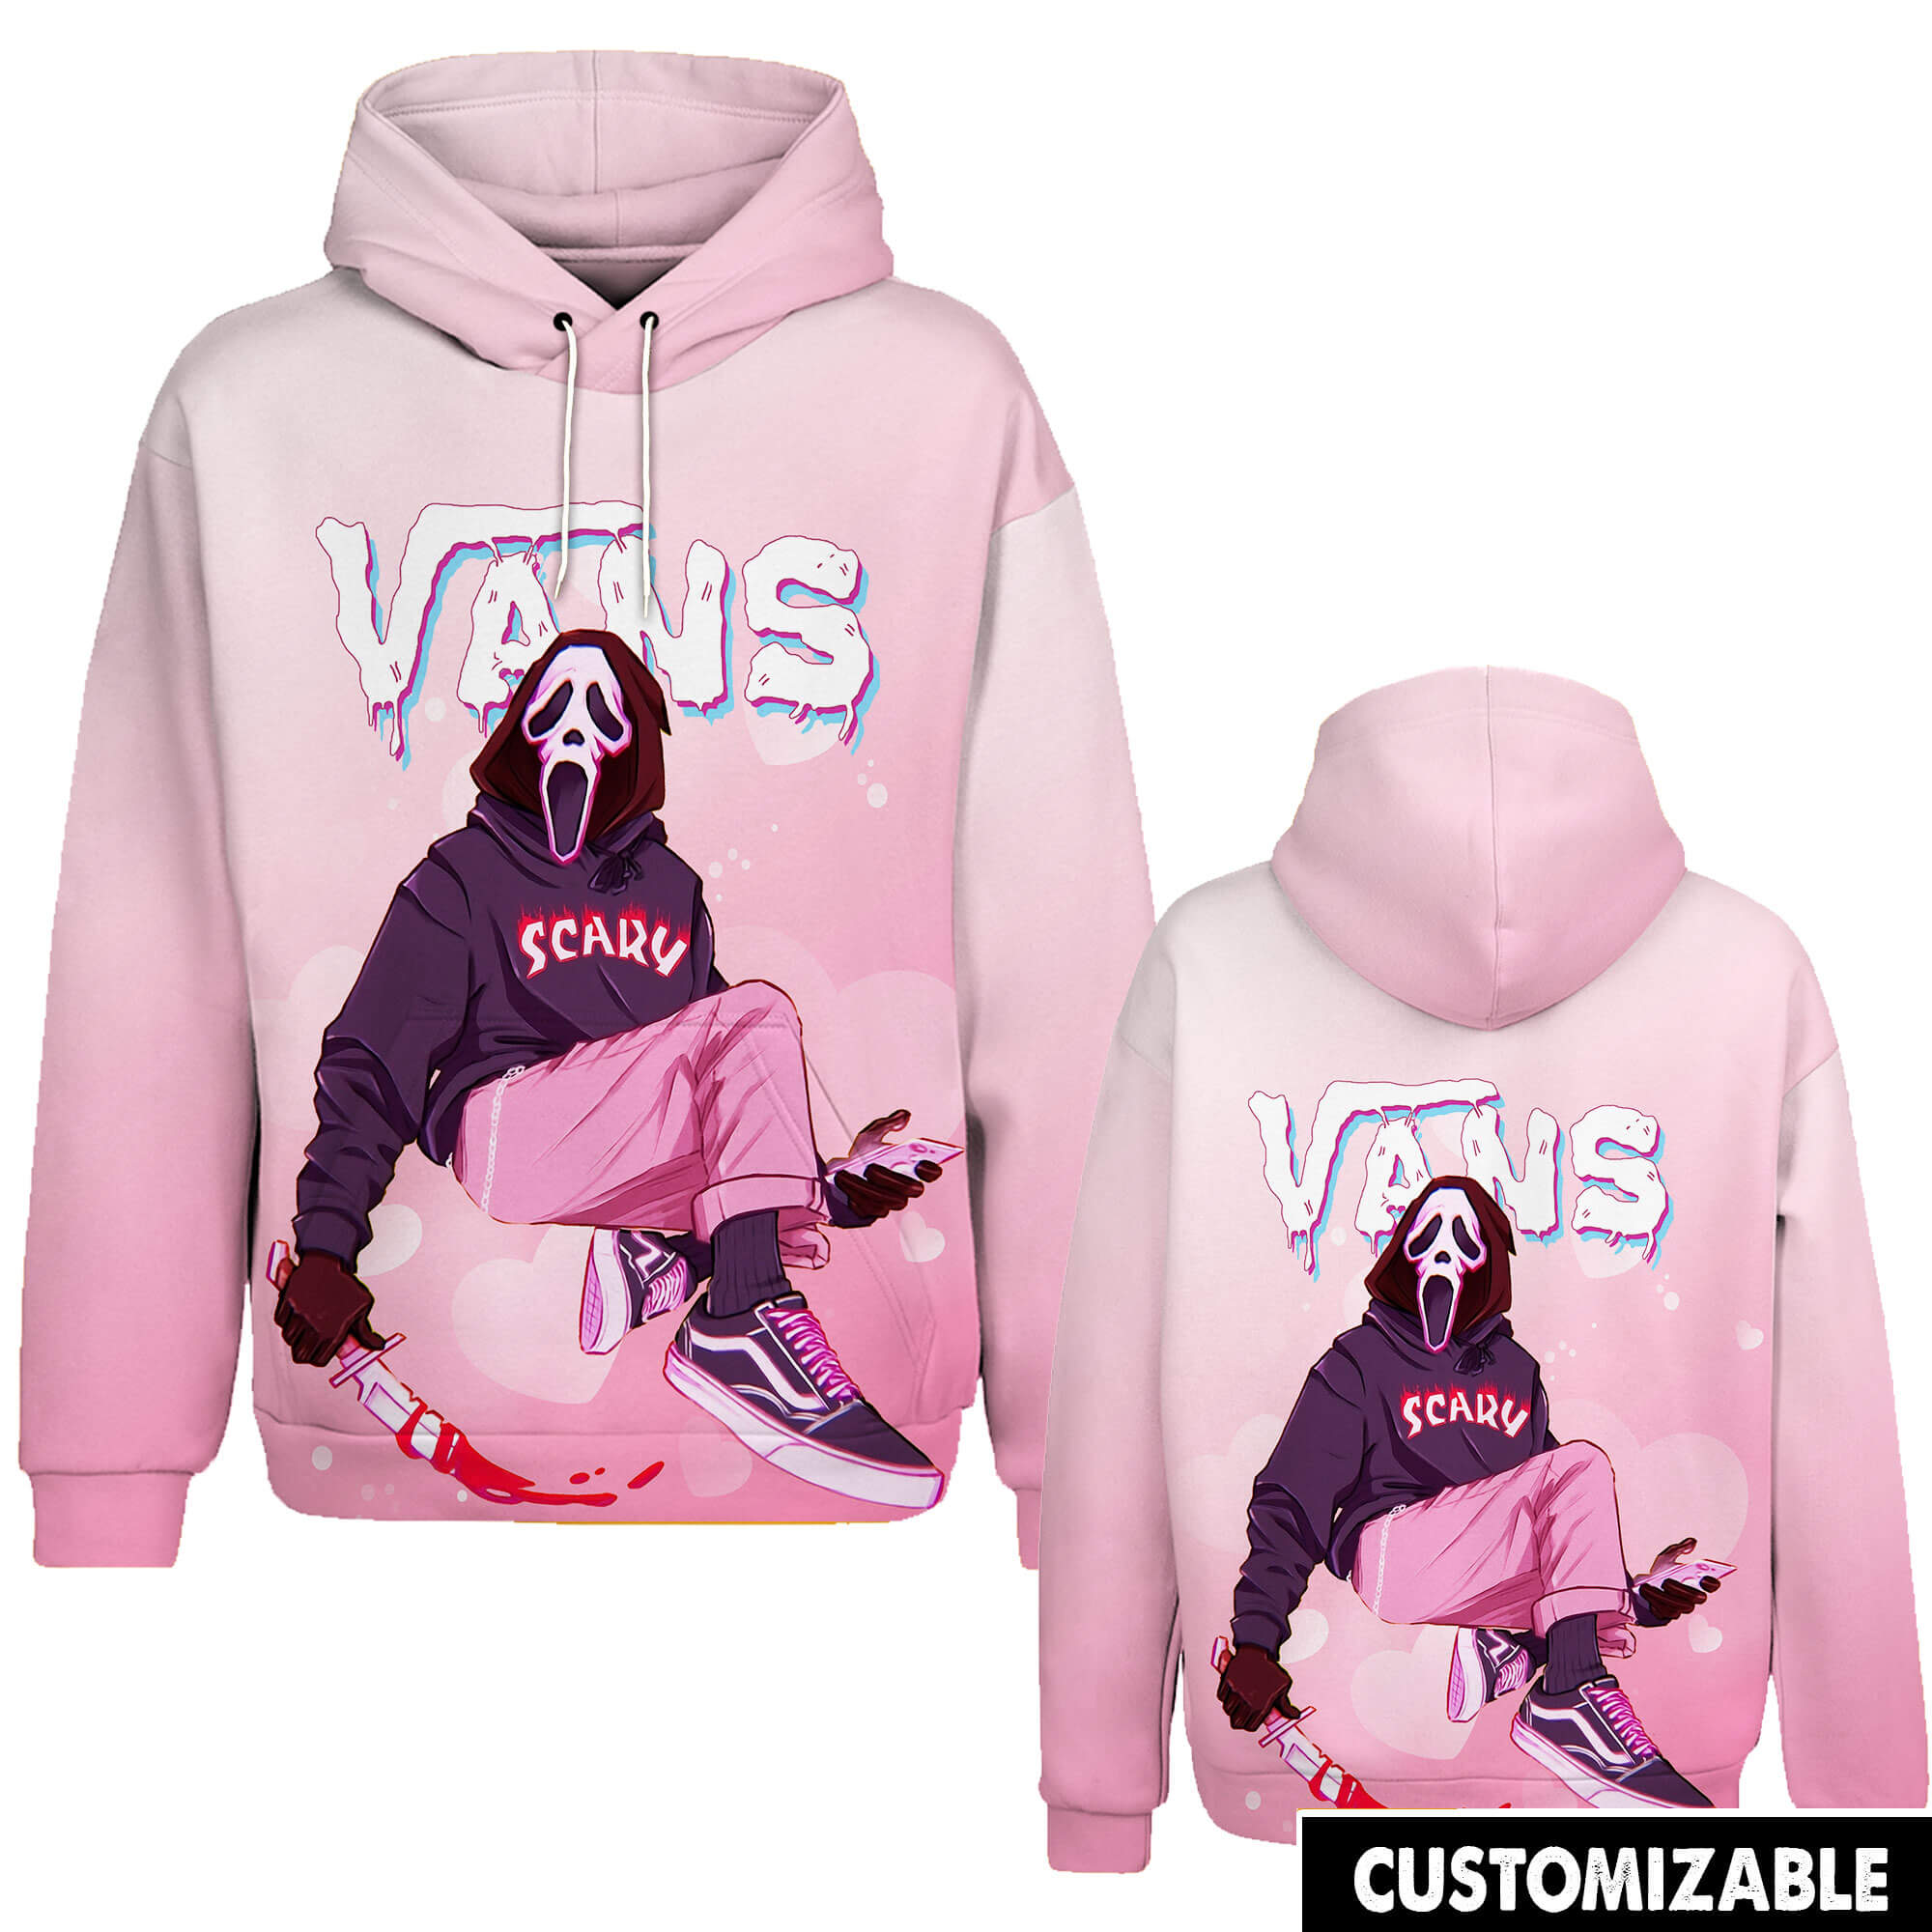 Customized Halloween Gift For Ghostface Fan Funny Ghostface Wears Sneaker Horror Movie VN Shirt